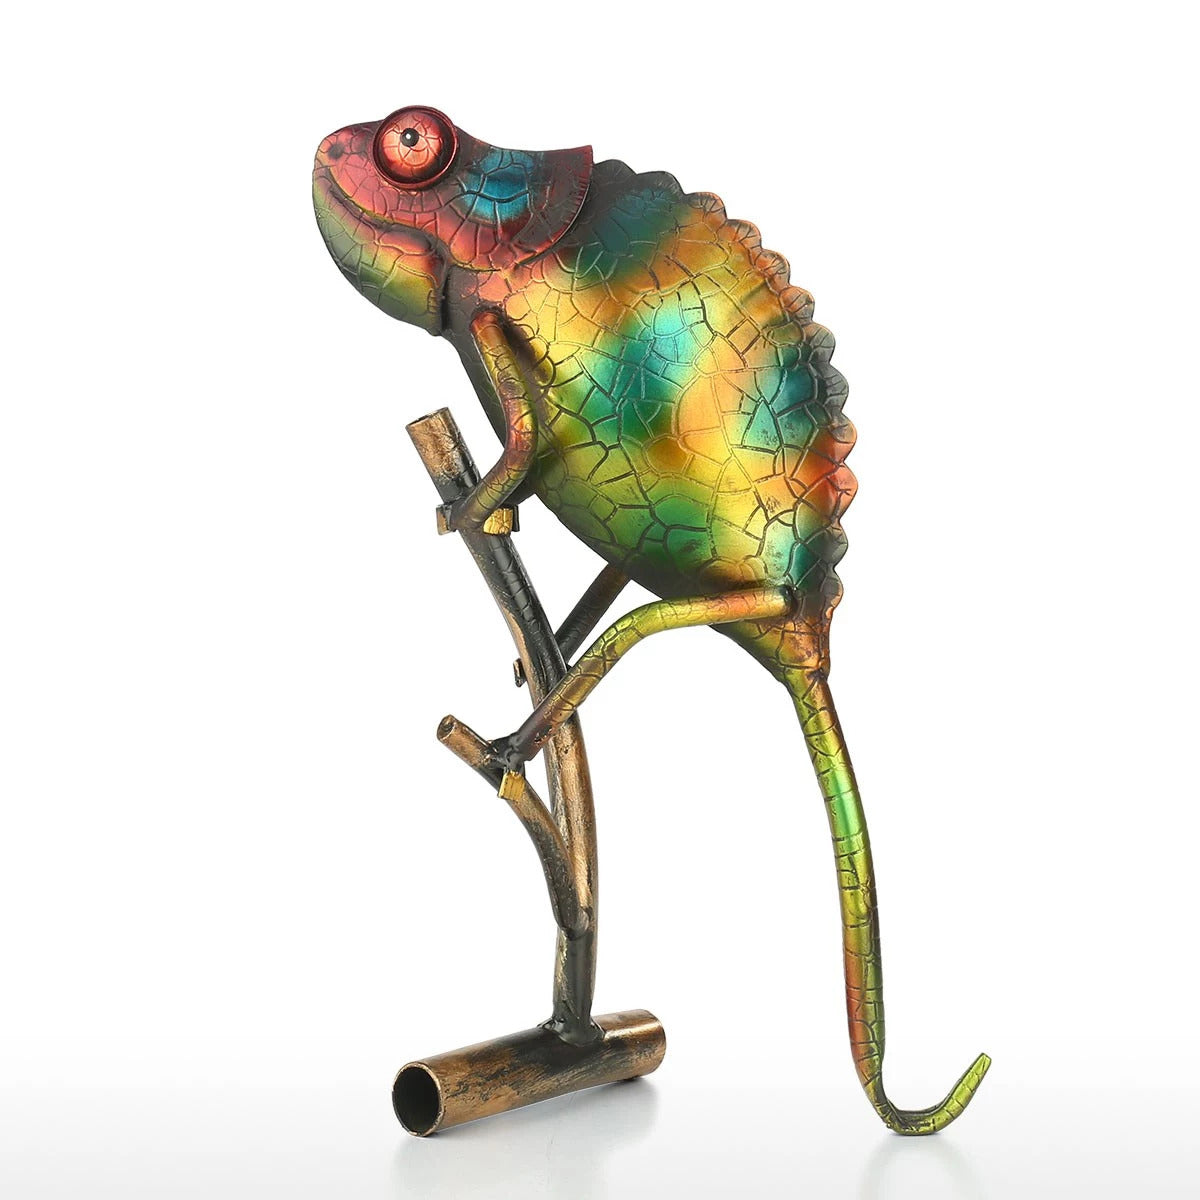 Colorful Lizard For Nursery and Kids Room